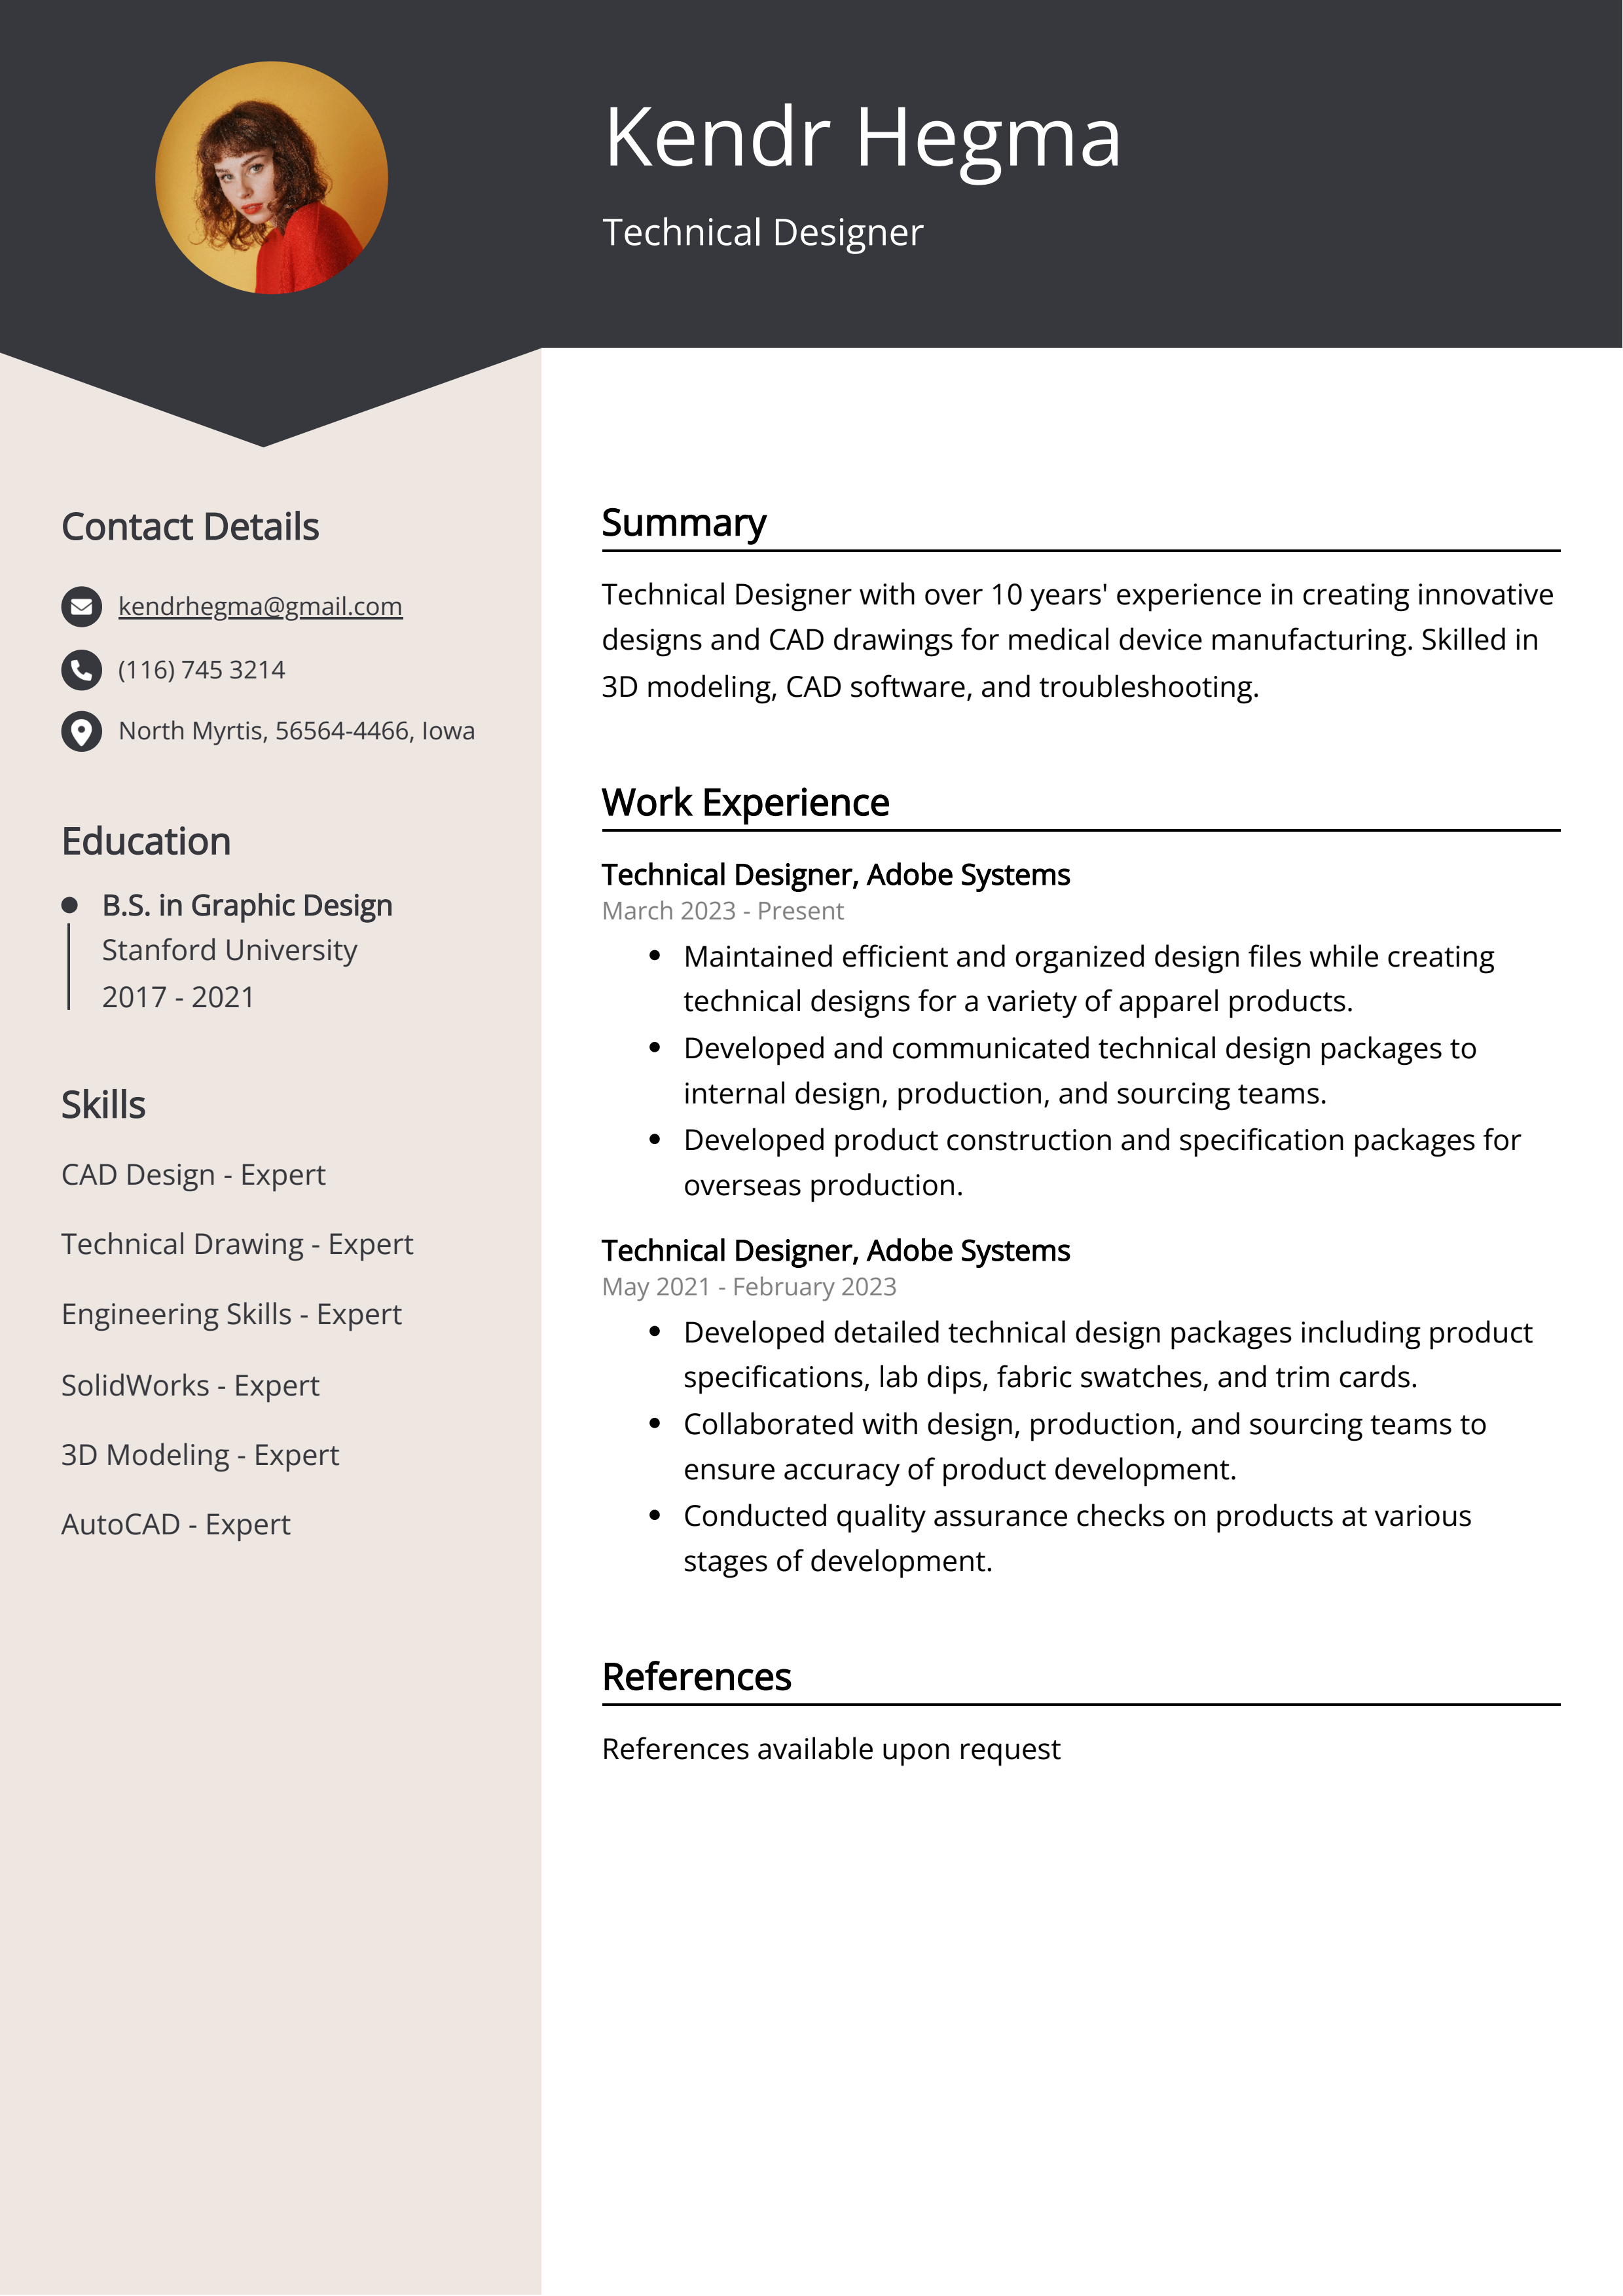 Technical Designer CV Example